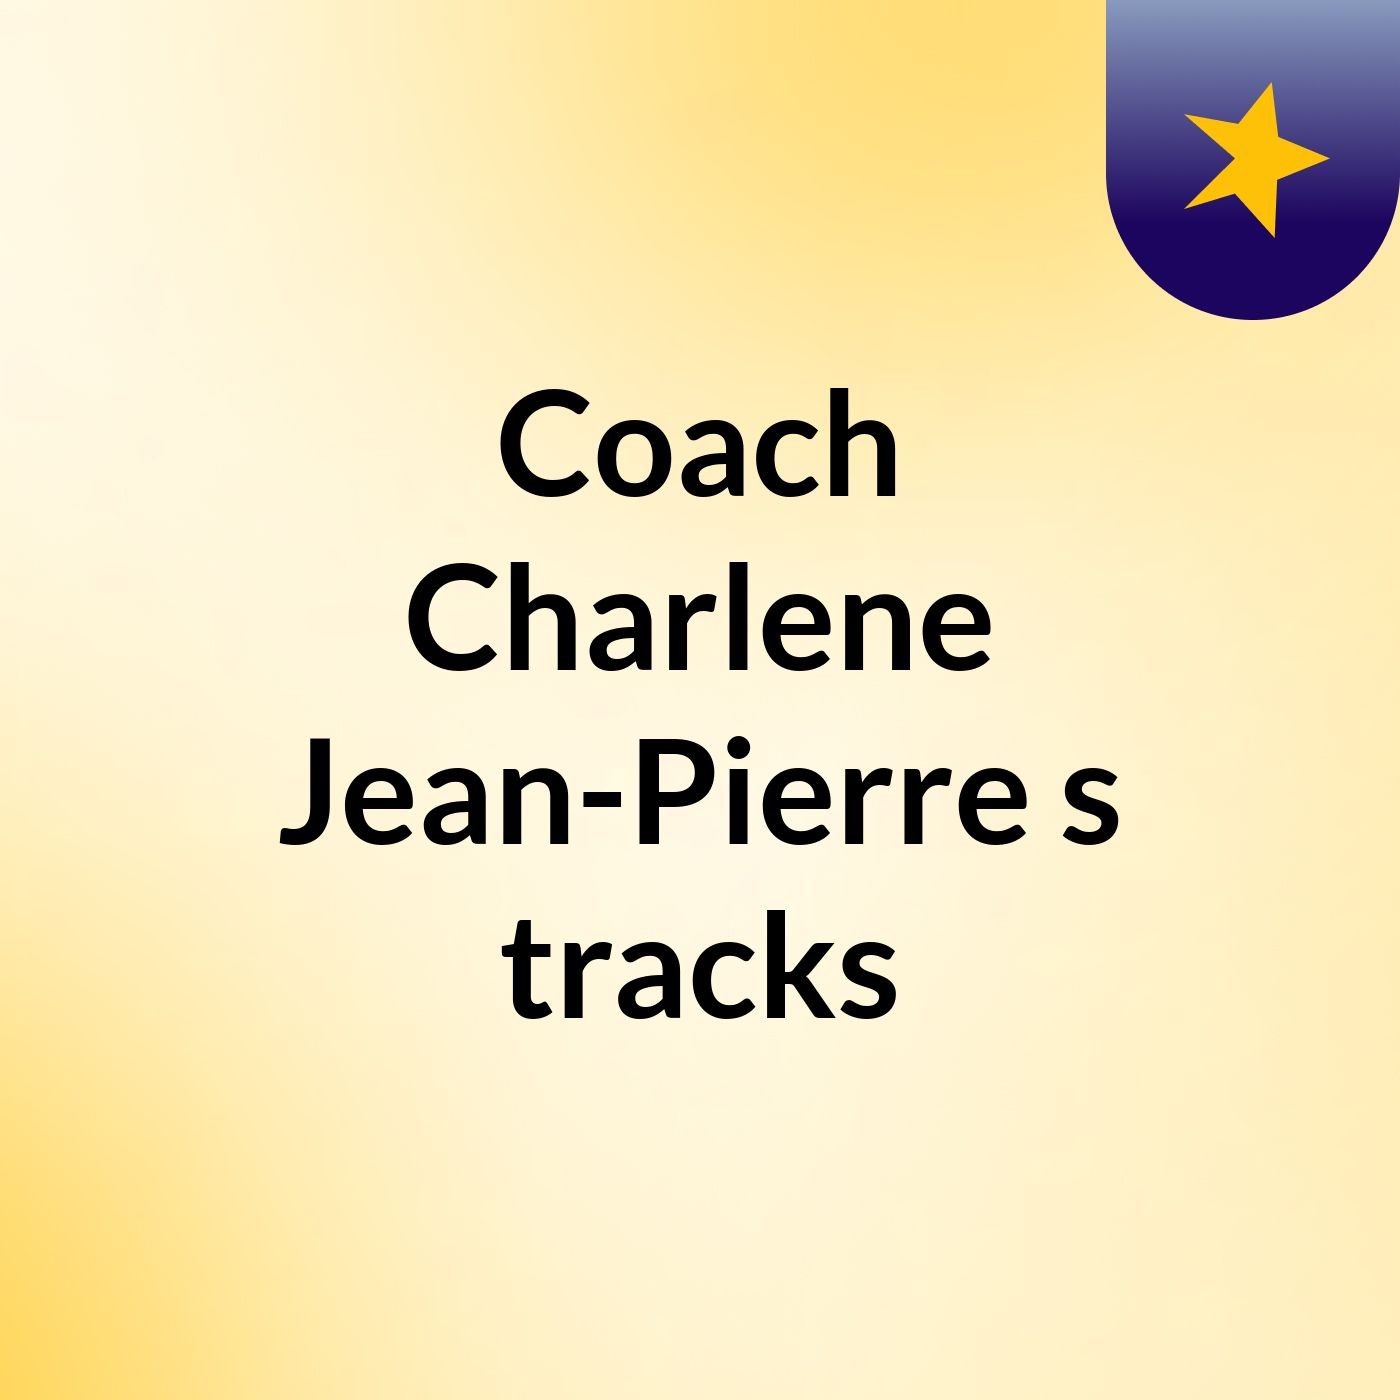 Coach Charlene Jean-Pierre's tracks